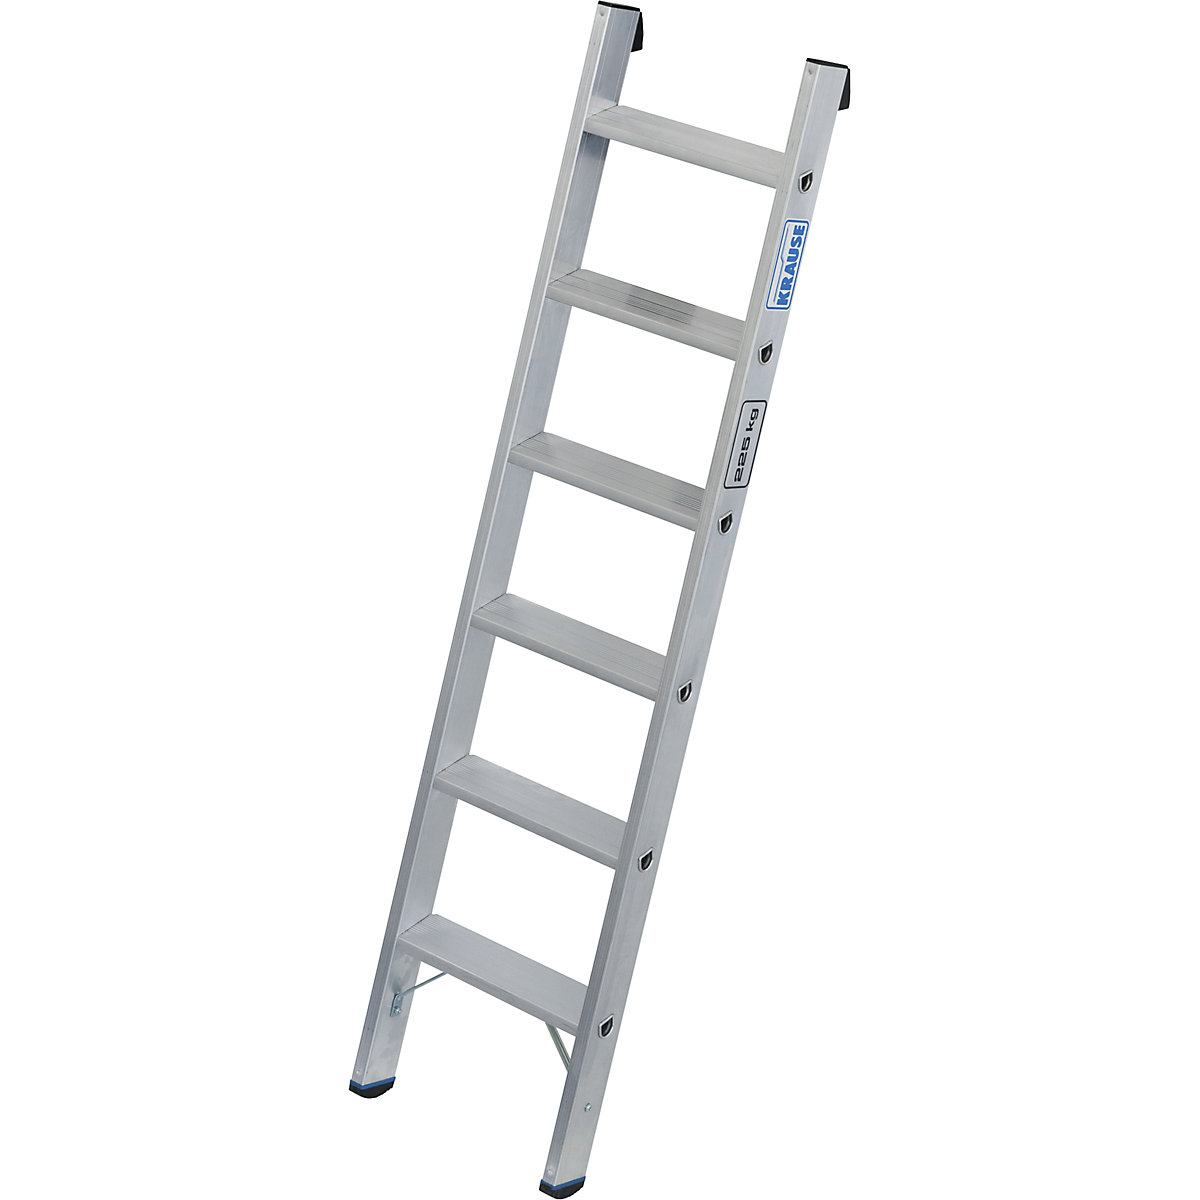 Heavy duty lean to ladder - KRAUSE